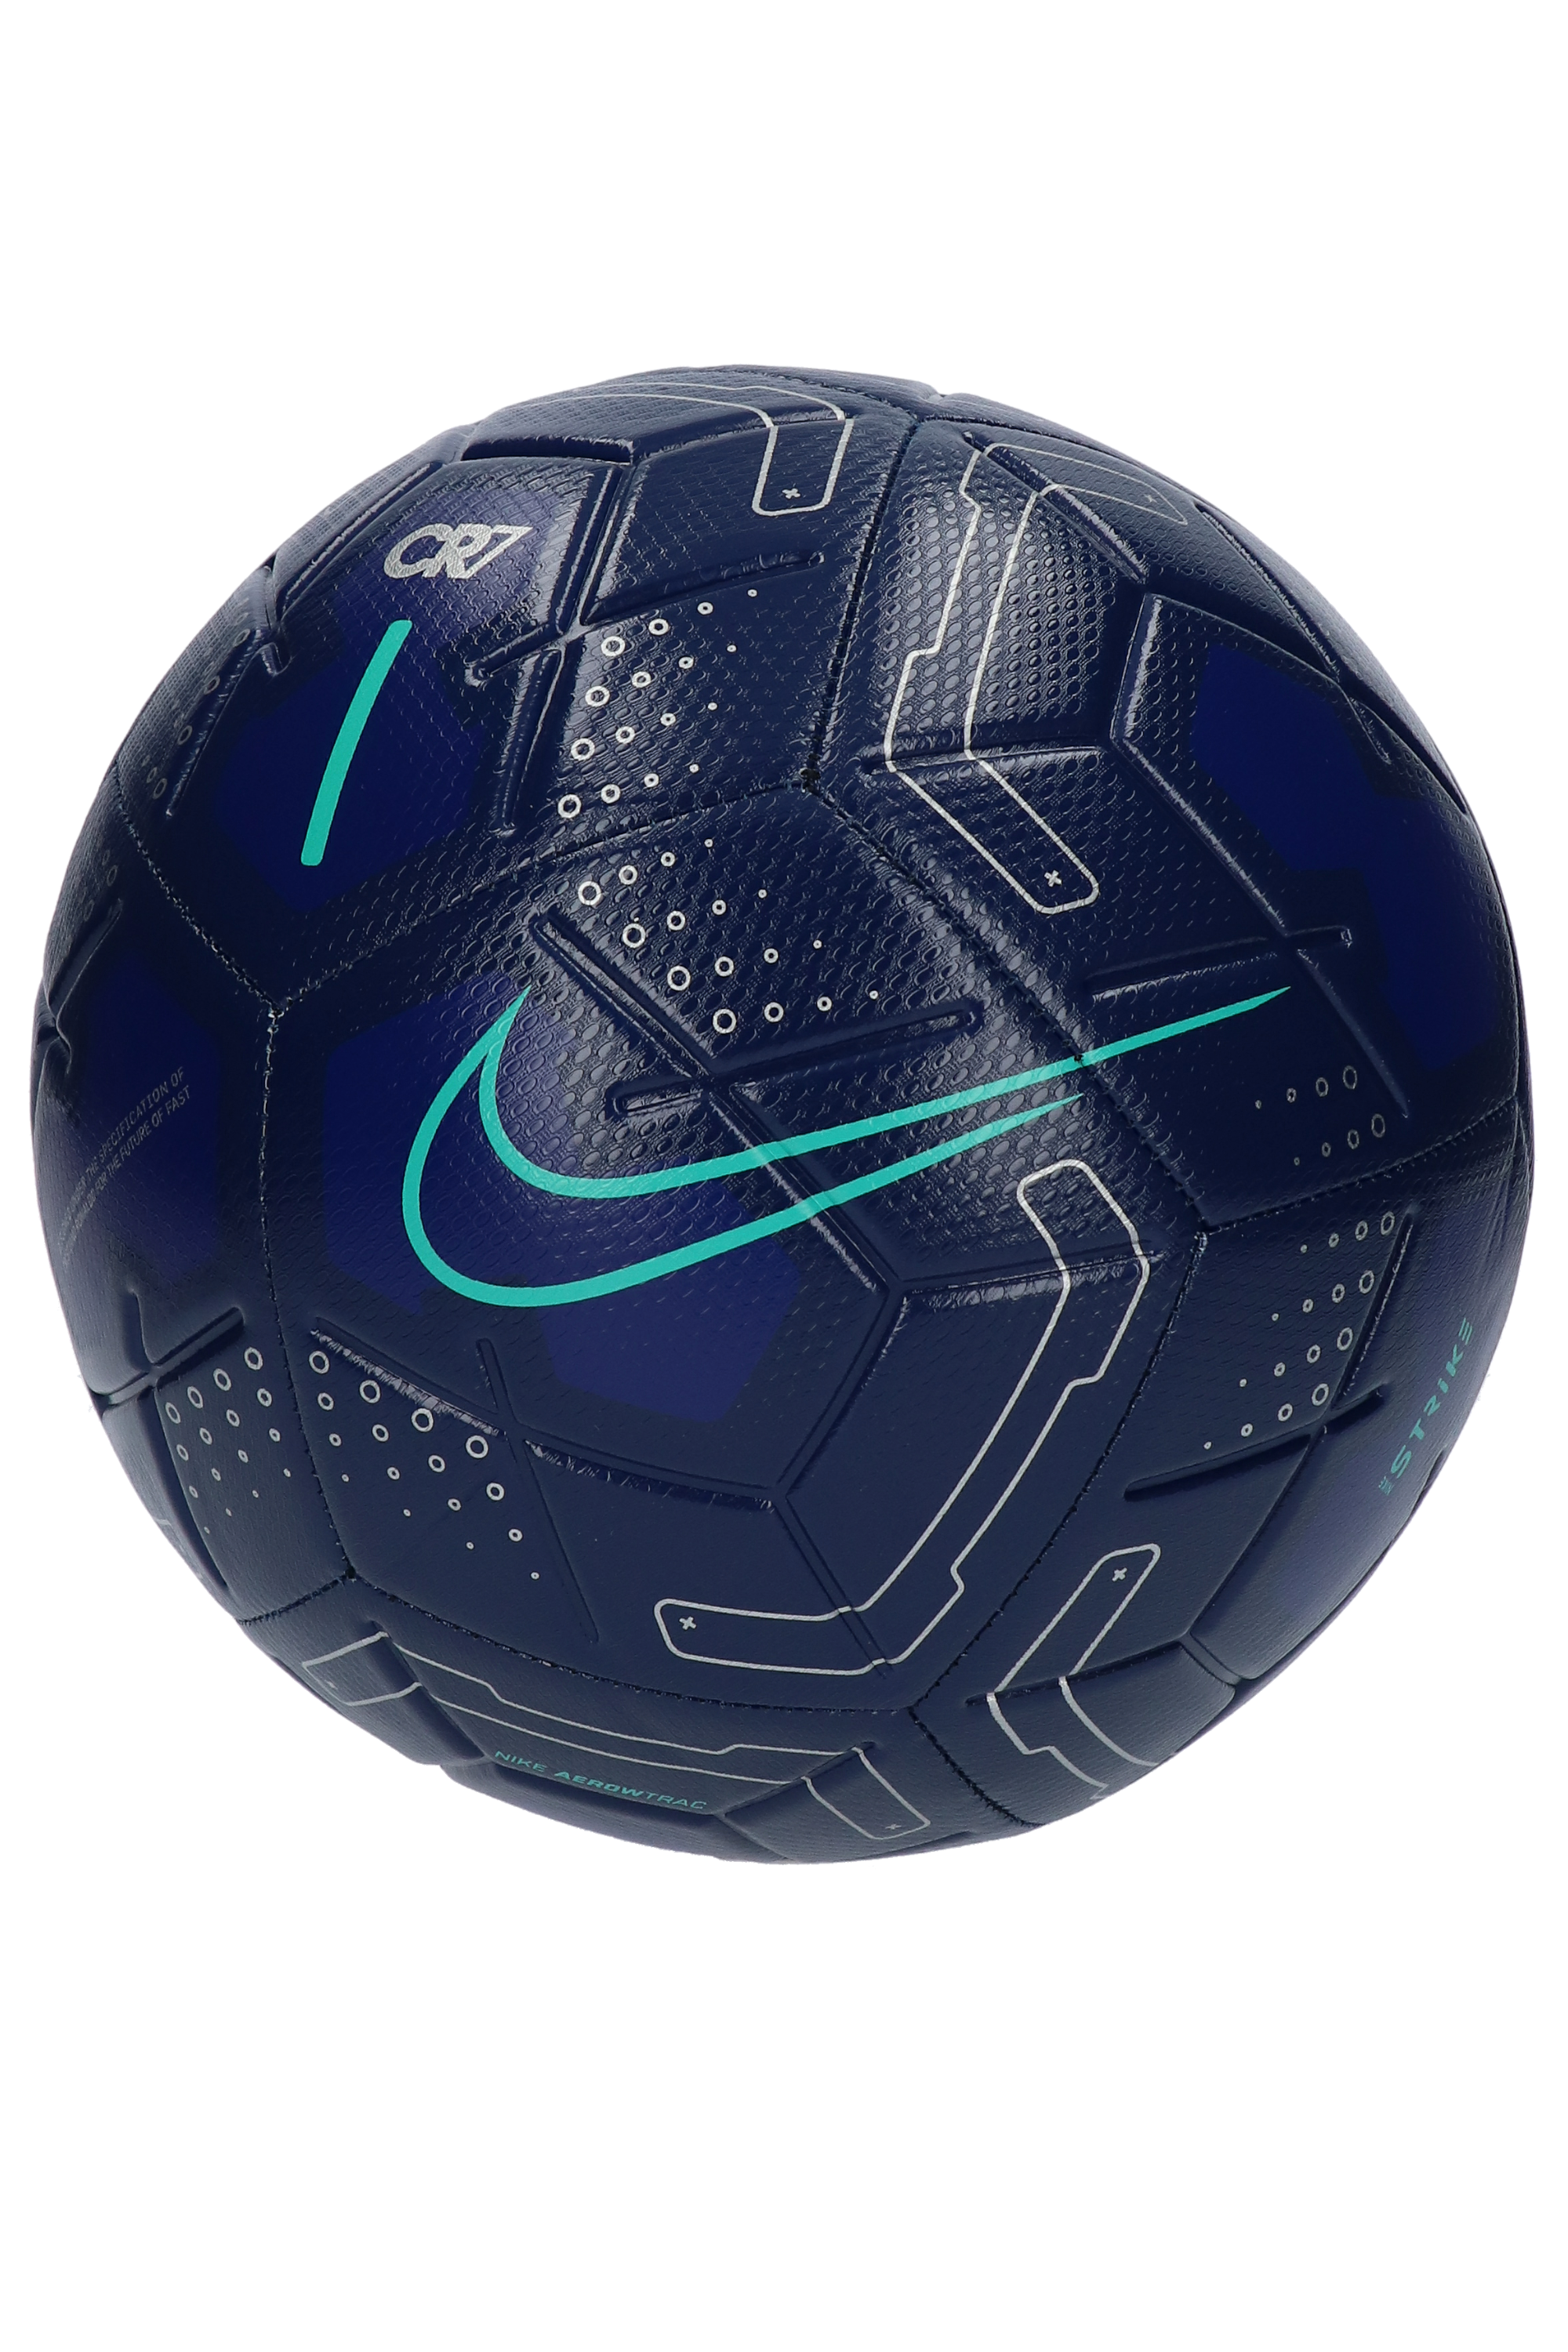 Ball Nike CR7 Strike size 5 | R-GOL.com 